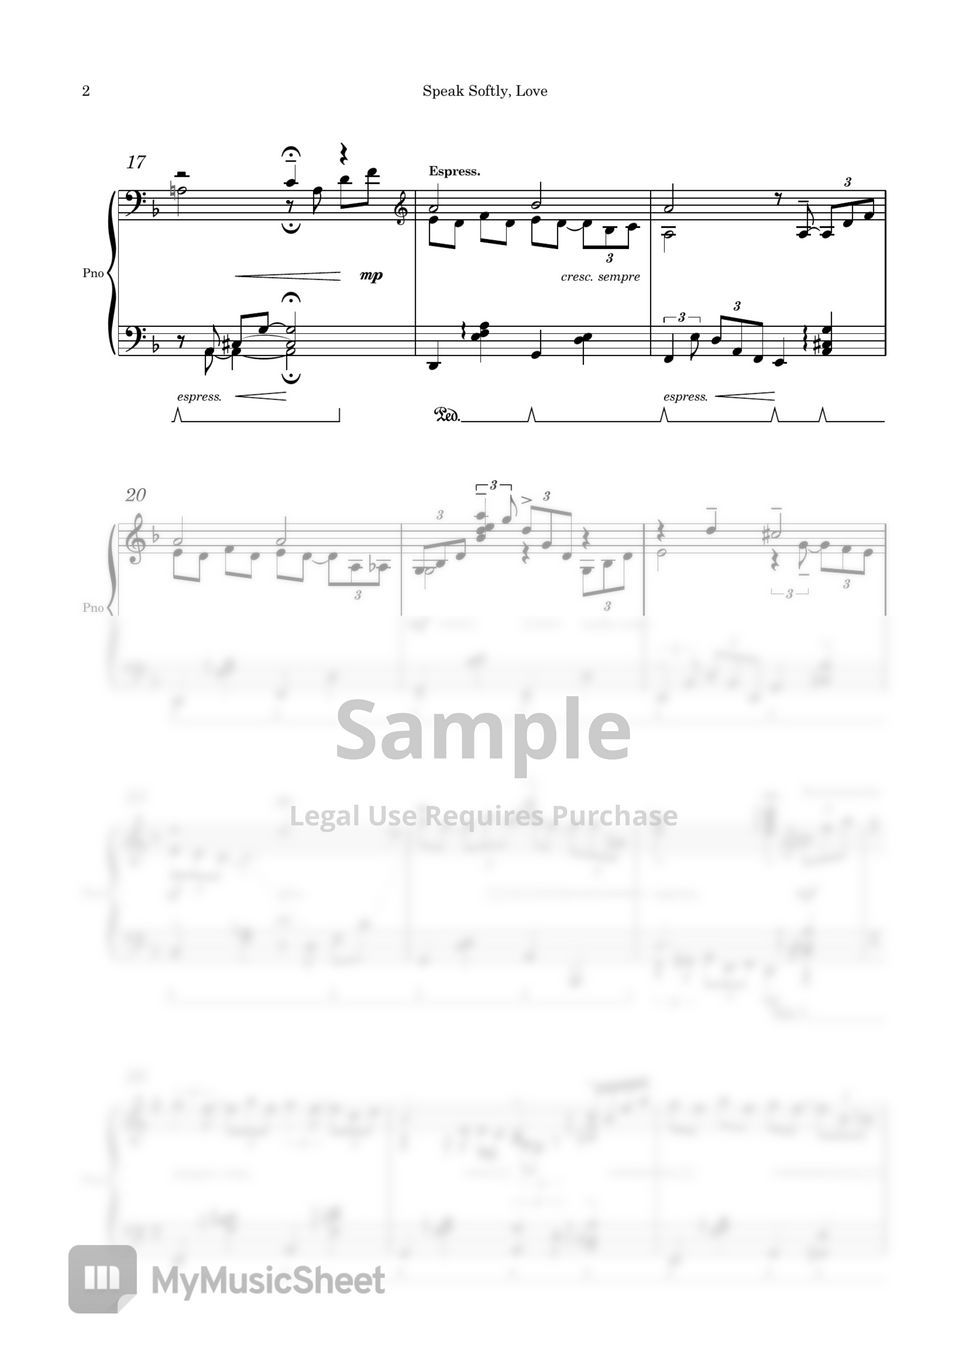 The Godfather Speak Softly Love Piano Arrangement Sheet By Edora Ms 